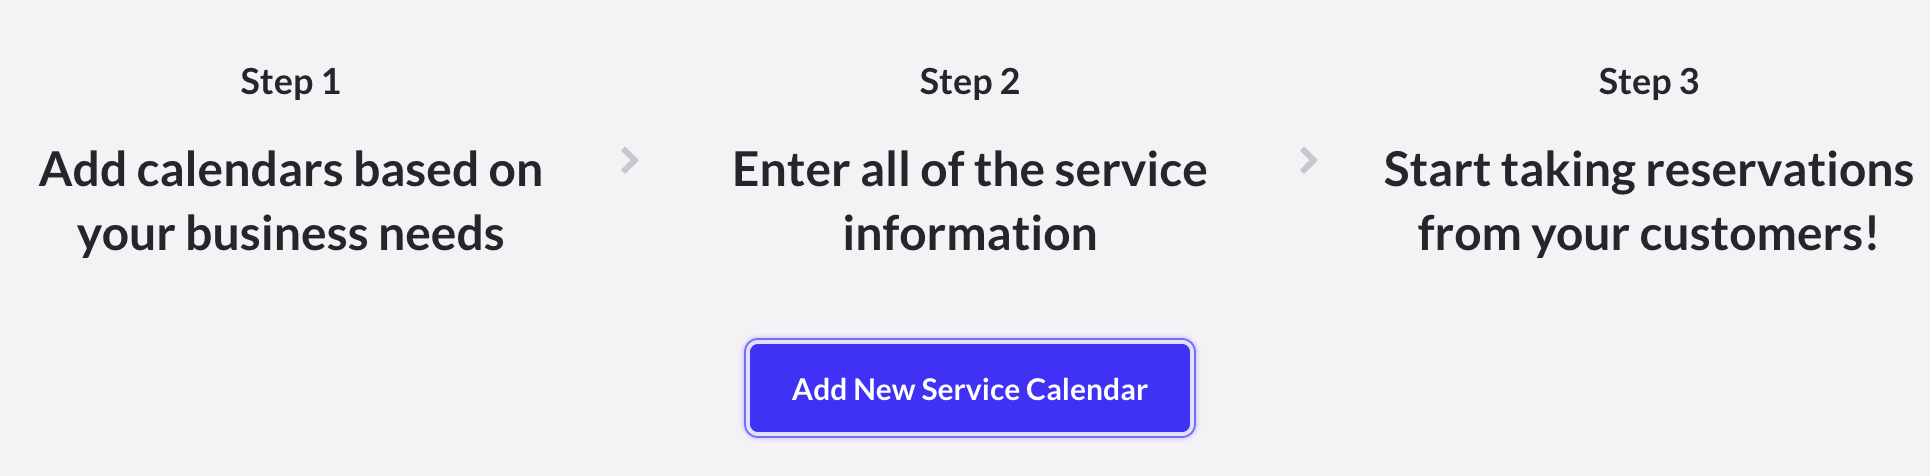 Initial setup screen with Add New Service Calendar button